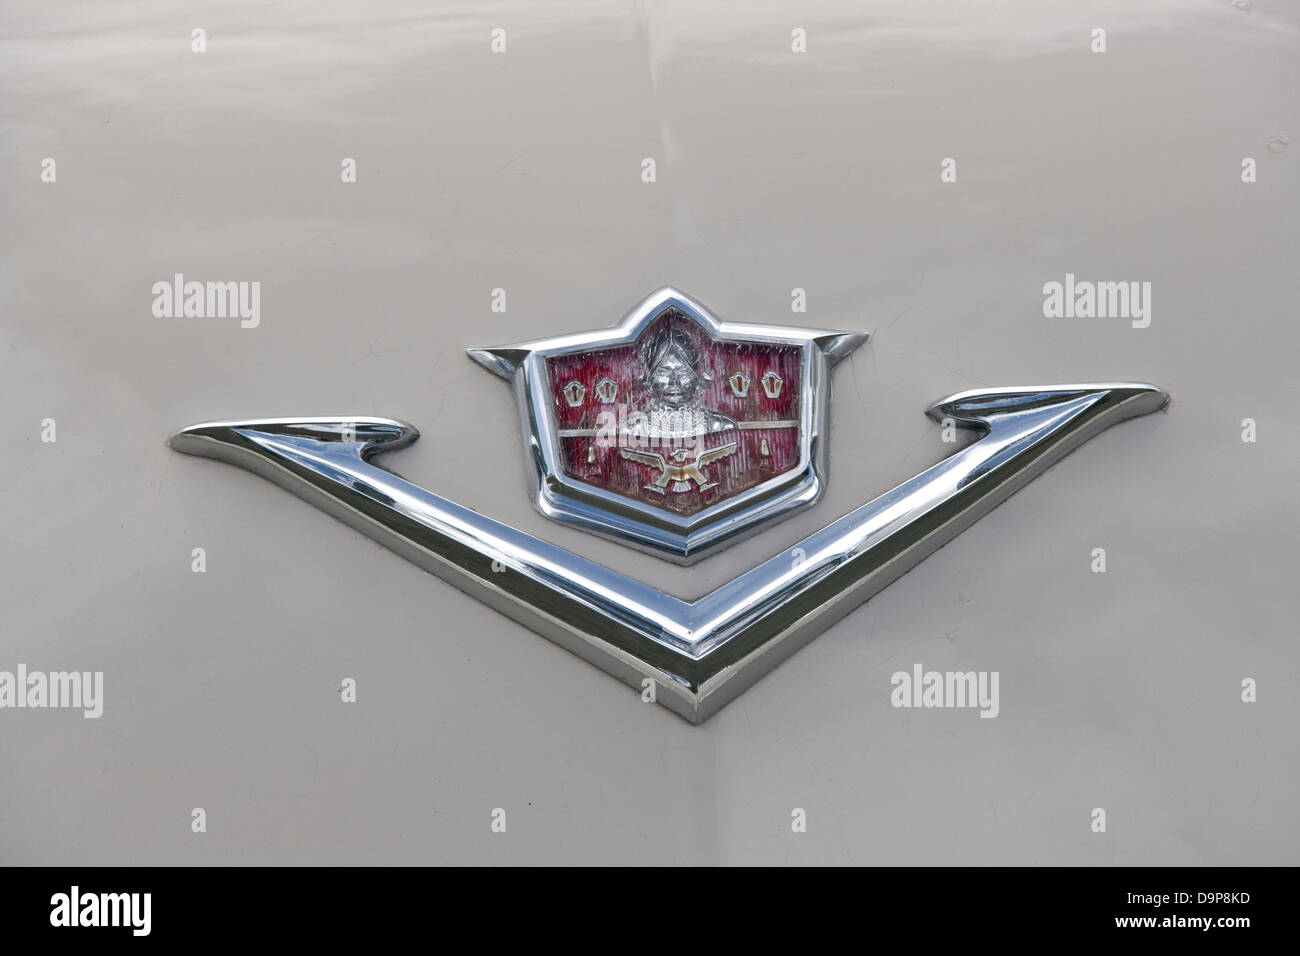 American classic car 1953 Desoto Firedome Club Coupe V8 trunk boot marque logo emblem brand motif badge Stock Photo